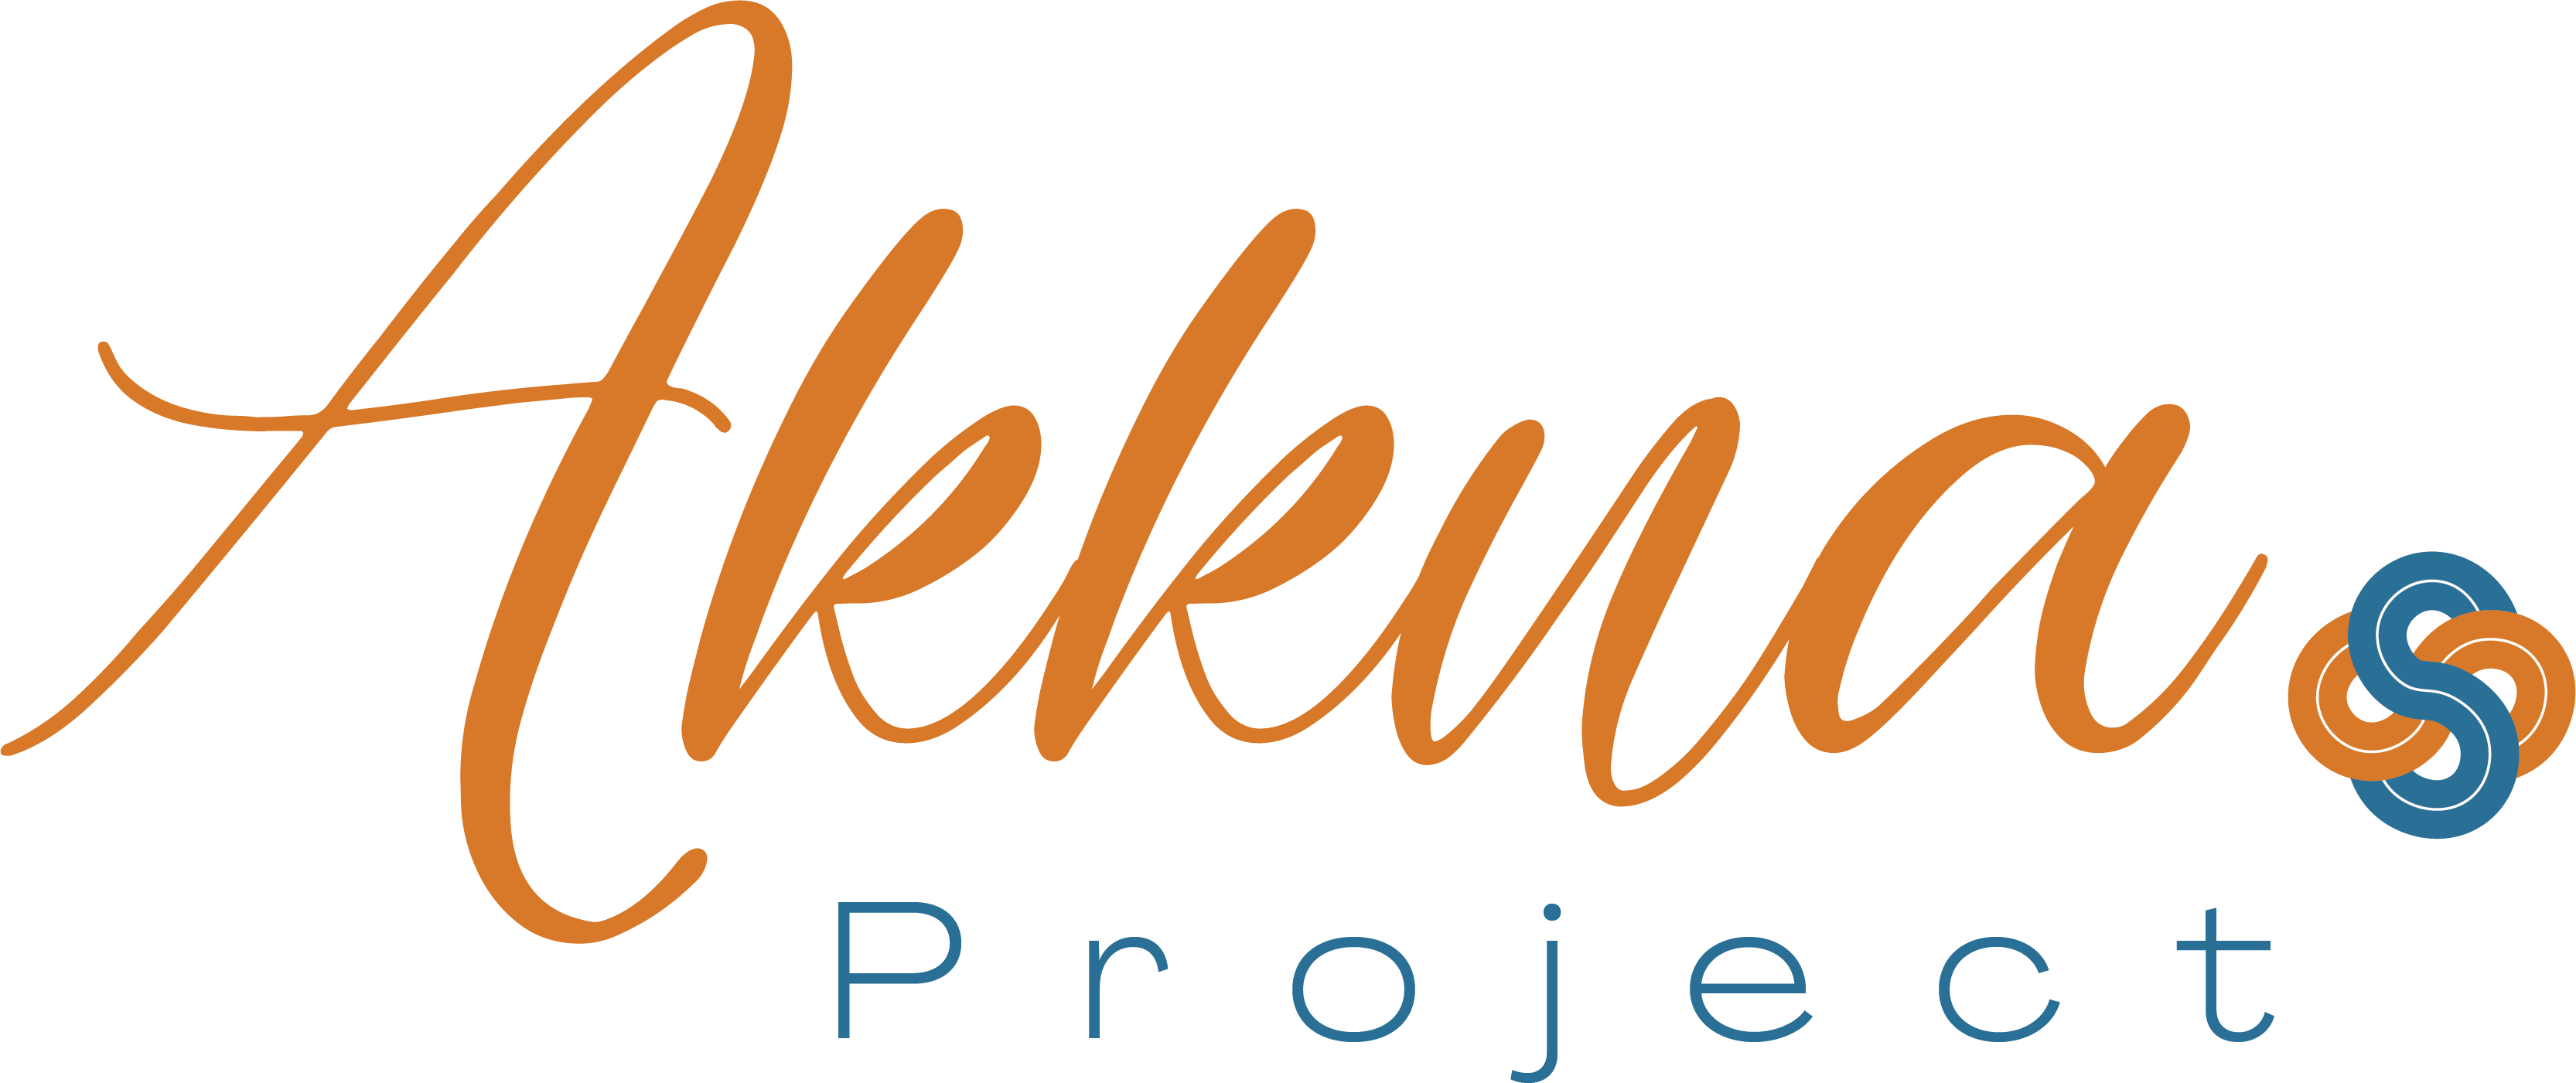 The Akkna Project